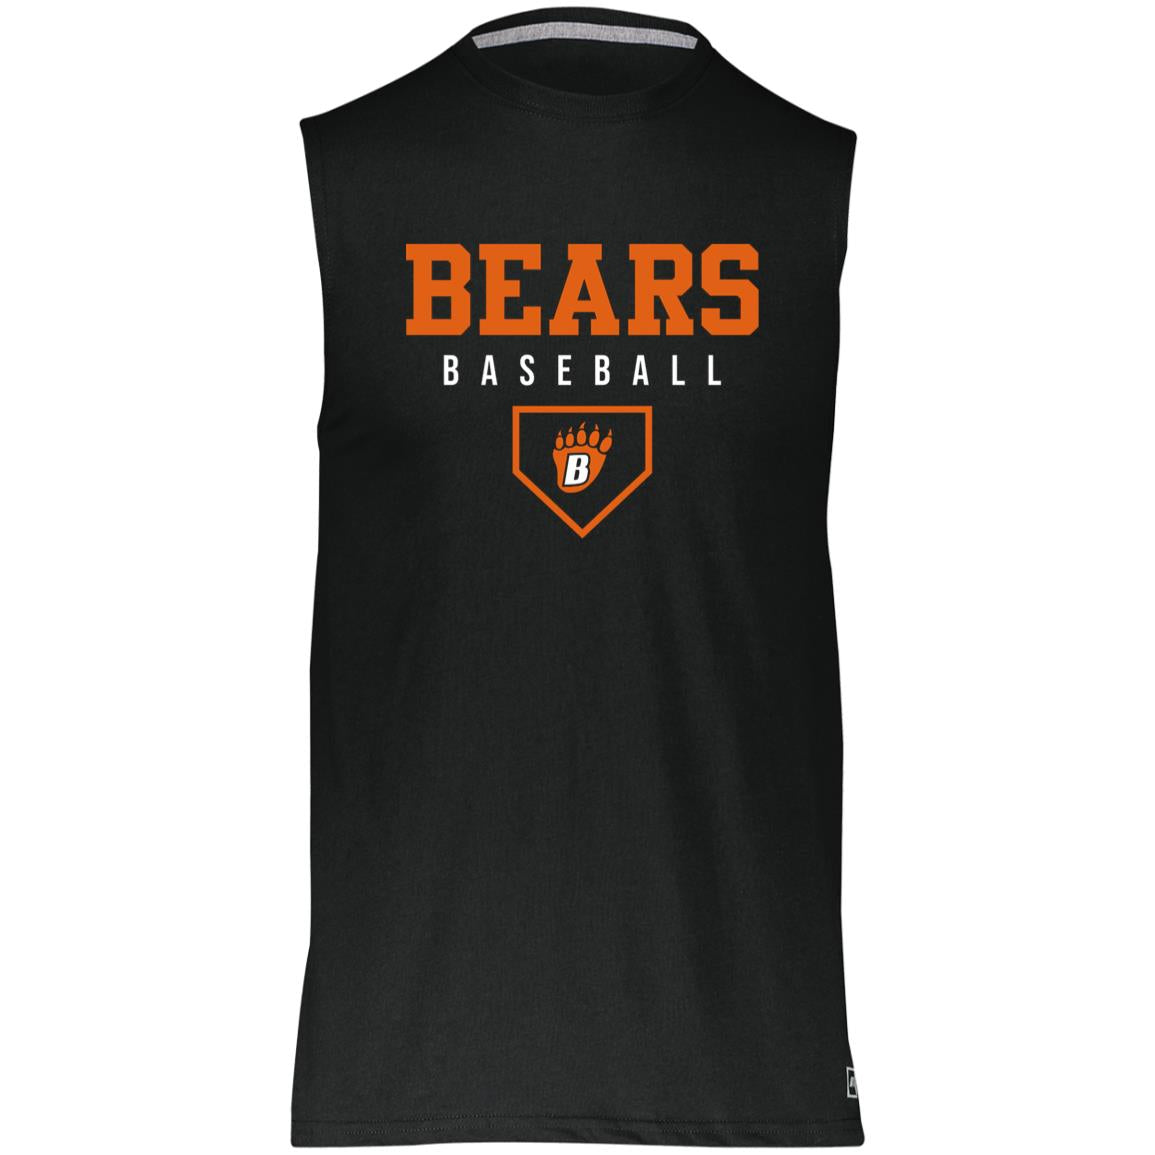 WBLHSB Bears Baseball Dri-Power Sleeveless Tee